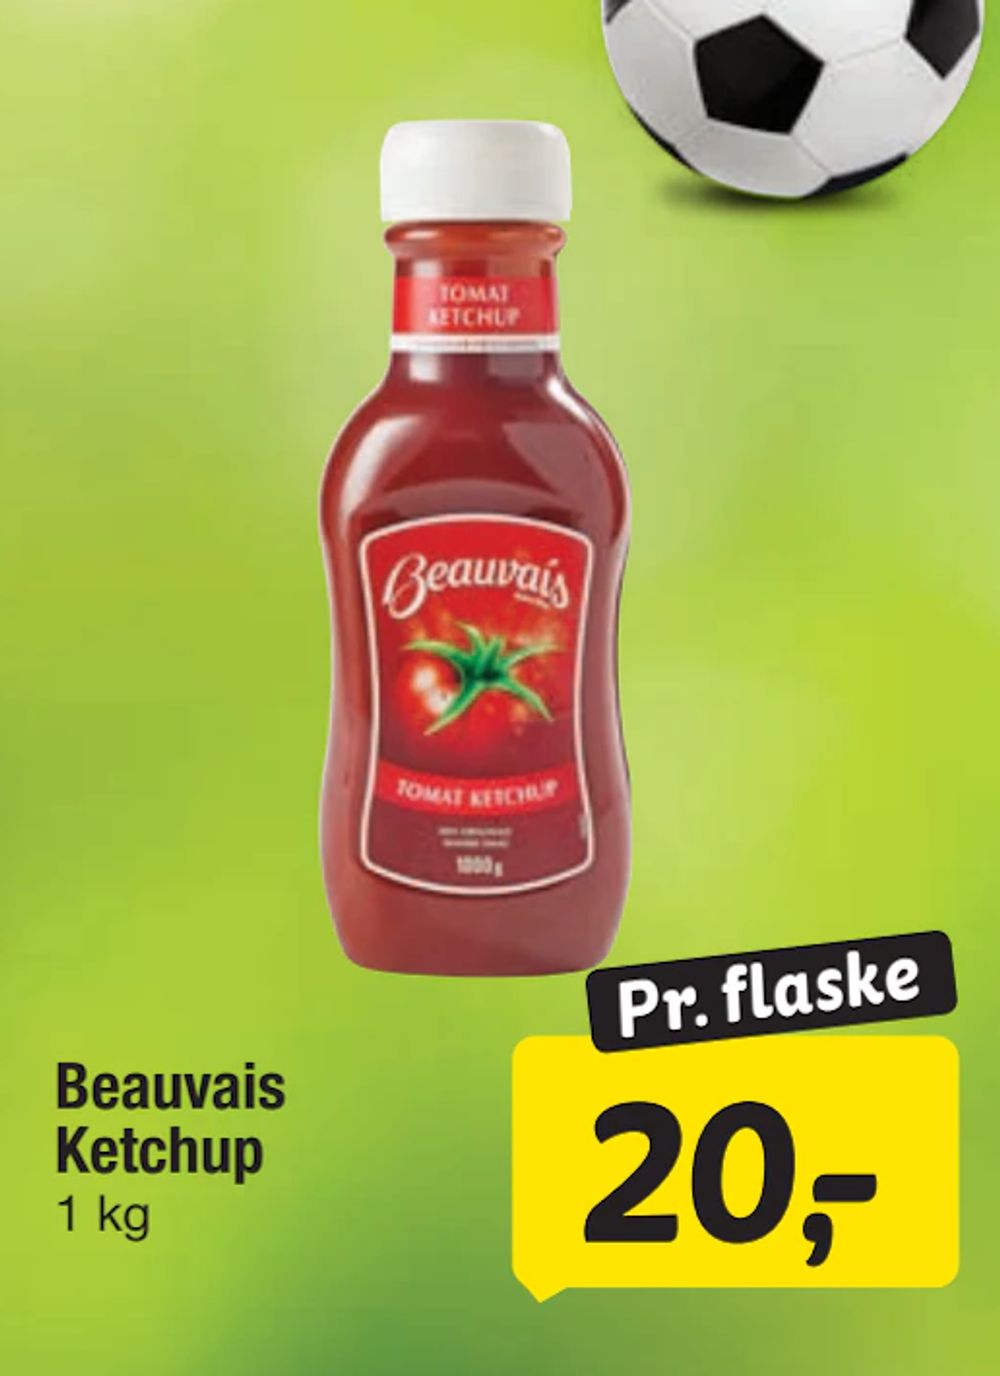 Tilbud på Beauvais Ketchup fra fakta Tyskland til 20 kr.